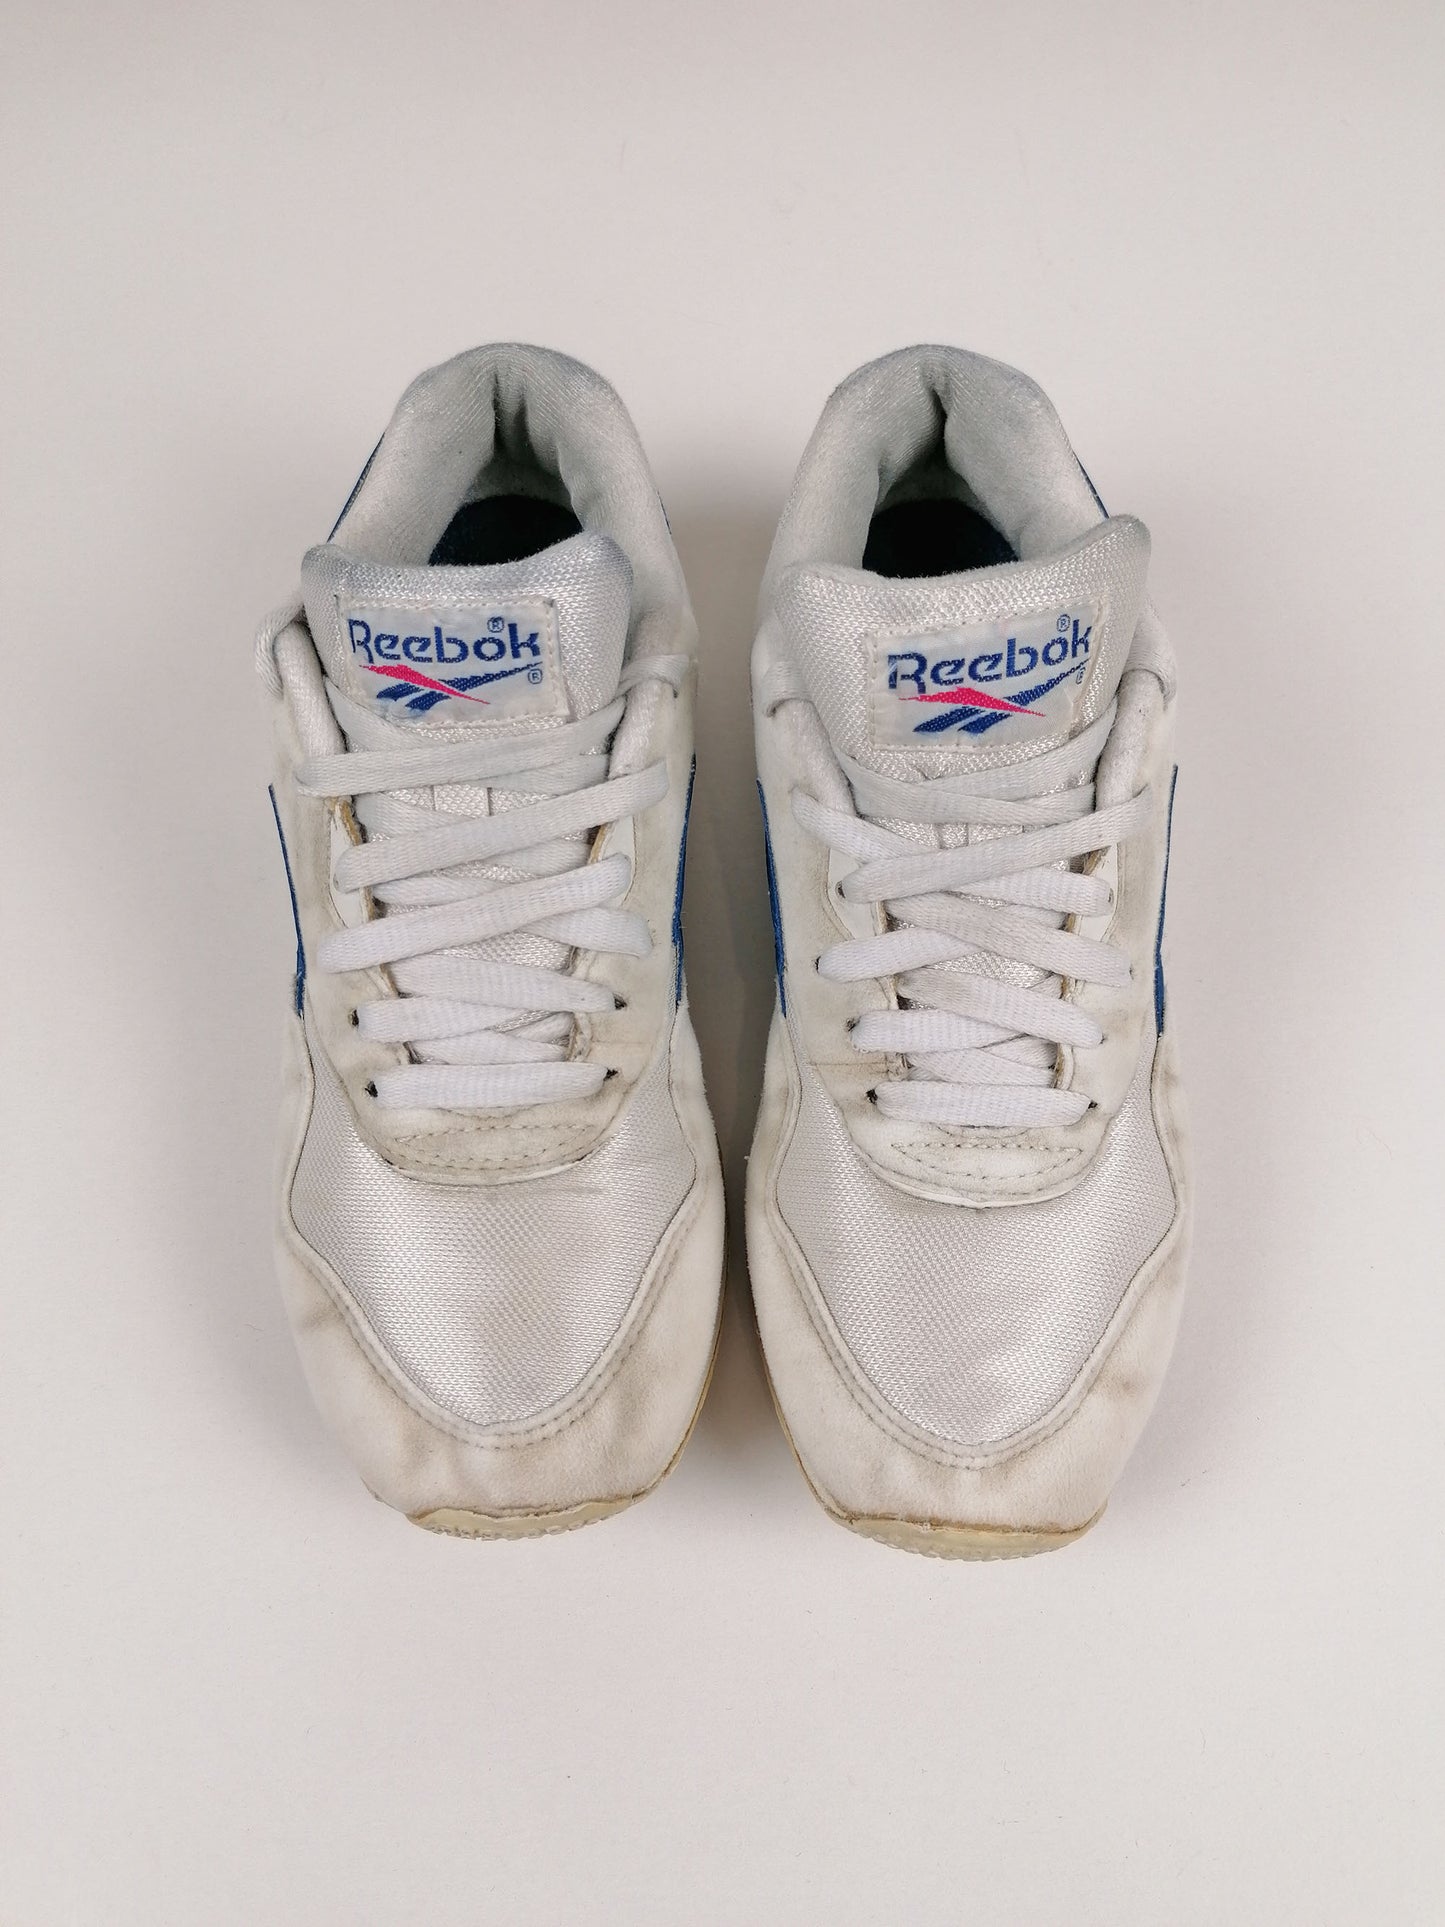 Vintage 90's REEBOK Classic Retro Sneakers White Nylon Trainers Women - size EU 37.5 / UK 4.5 / us 6.5